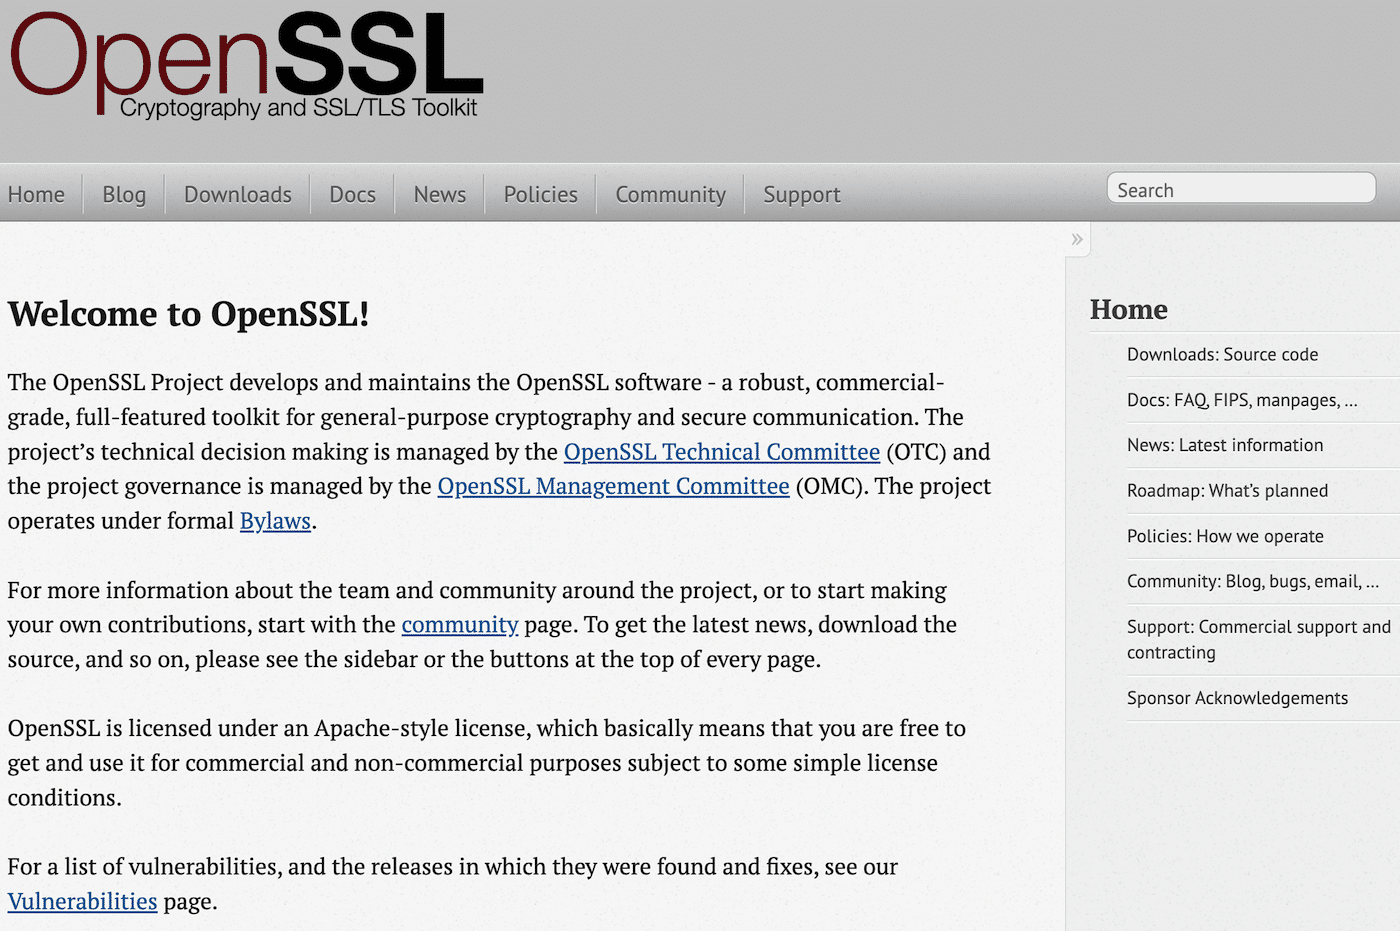 The OpenSSL website homepage